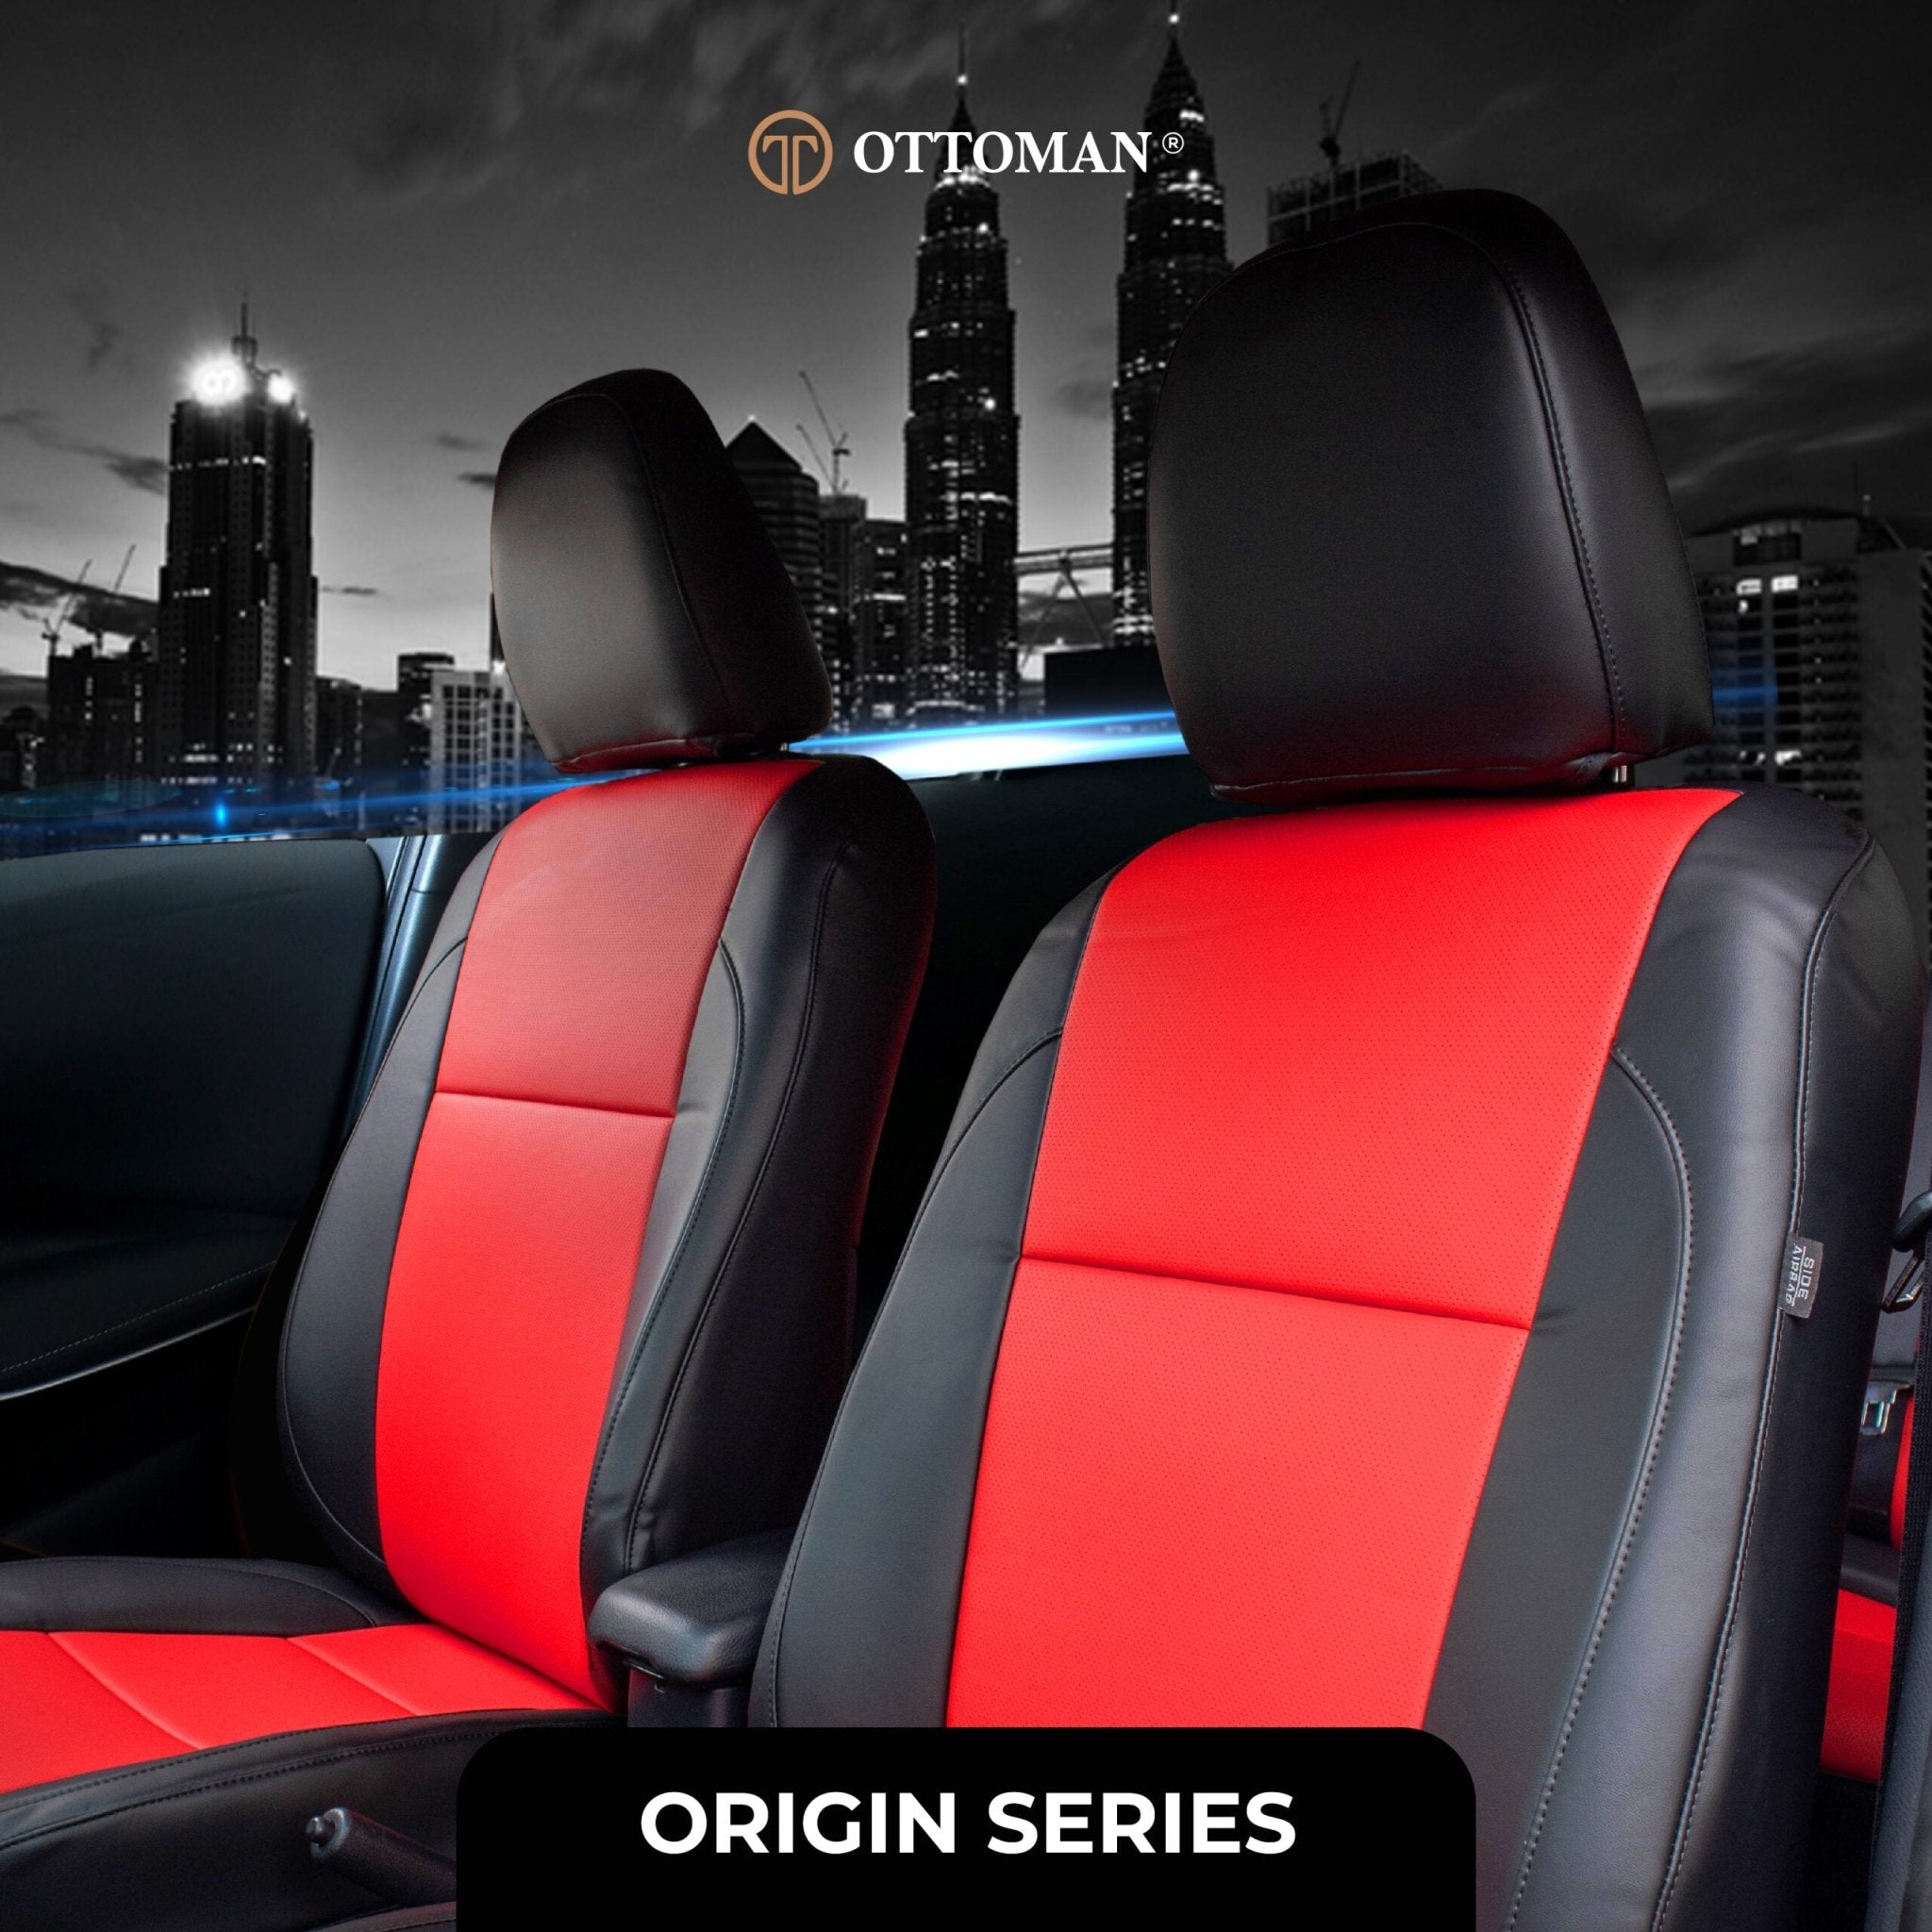 Toyota Vios (2007-2013) Ottoman Seat Cover Seat Cover in Klang Selangor, Penang, Johor Bahru - Ottoman Car Mats